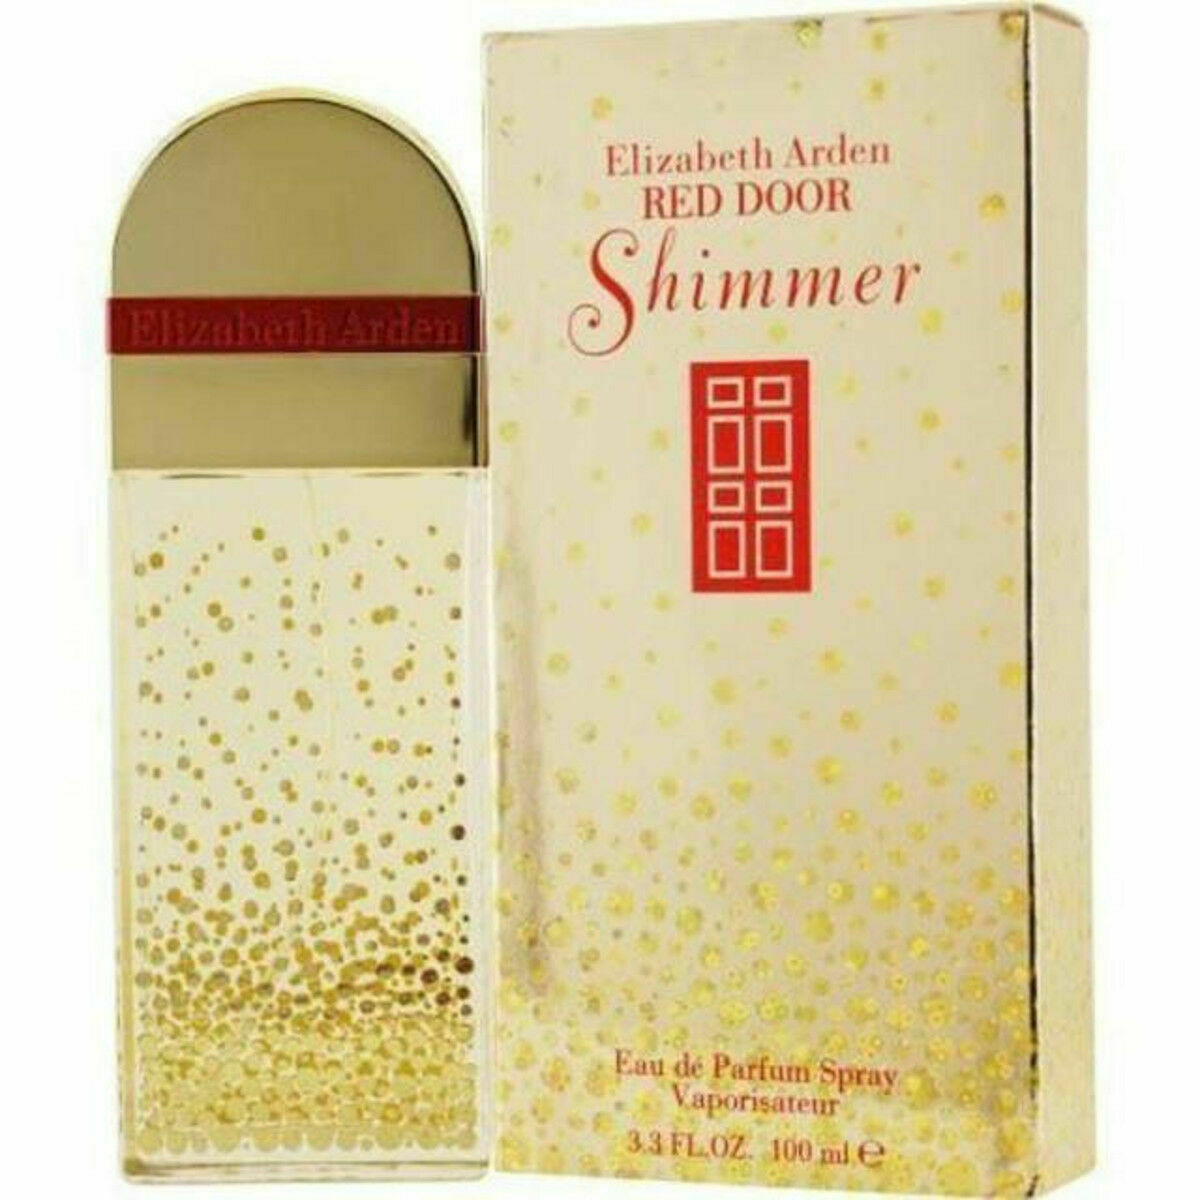 RED DOOR SHIMMER Elizabeth Arden EDP Perfume 3.3 oz / 3.4 oz NEW IN BOX - $22.77